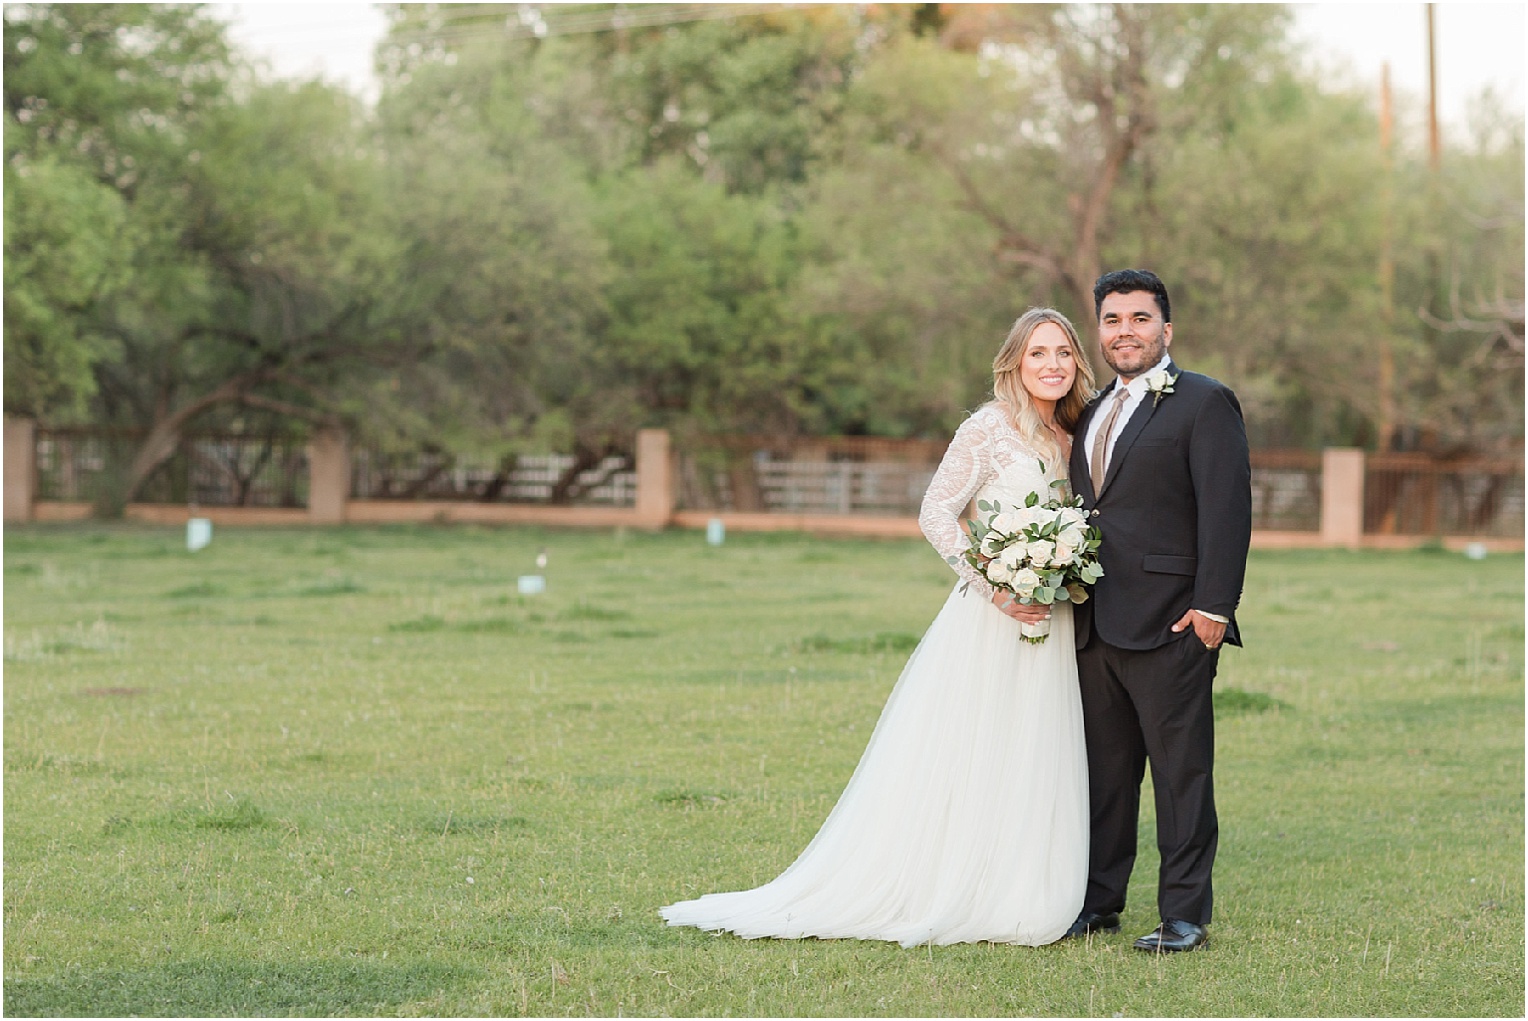 Intimate Backyard Wedding Tucson, AZ Chanel + Eddie bride and groom sunset portraits